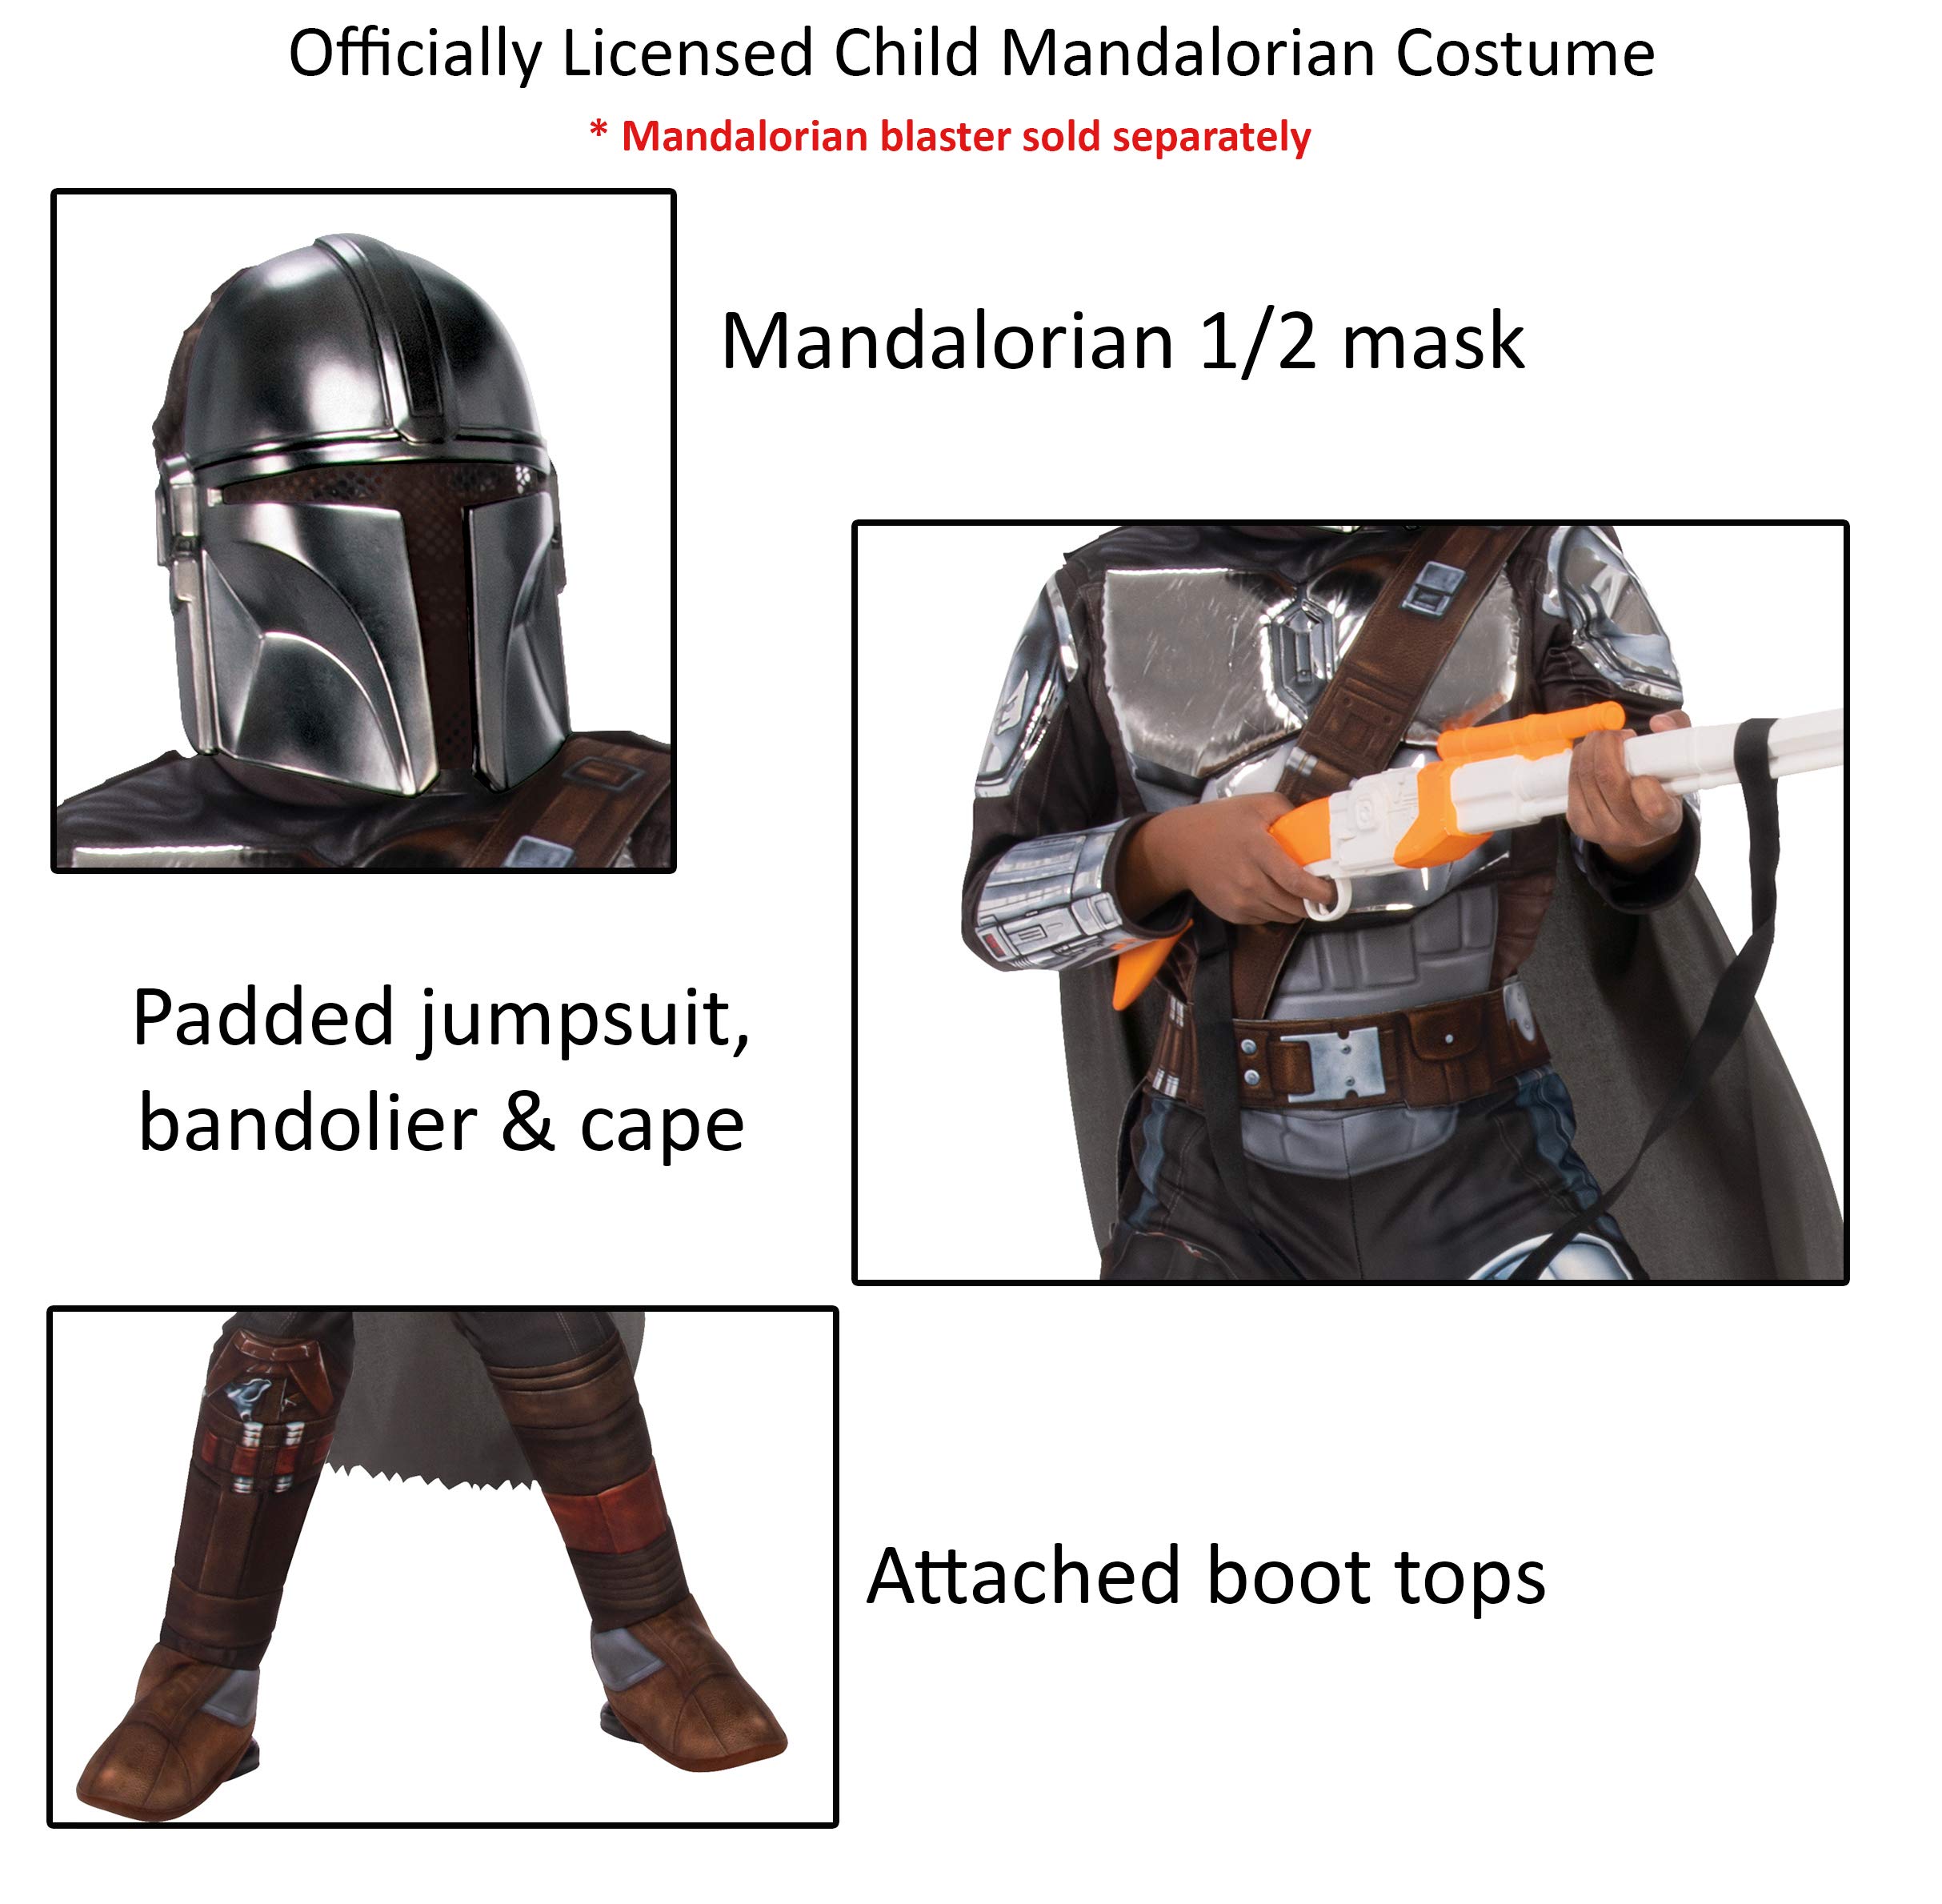 Rubie's Star Wars The Mandalorian Beskar Armor Children's Costume